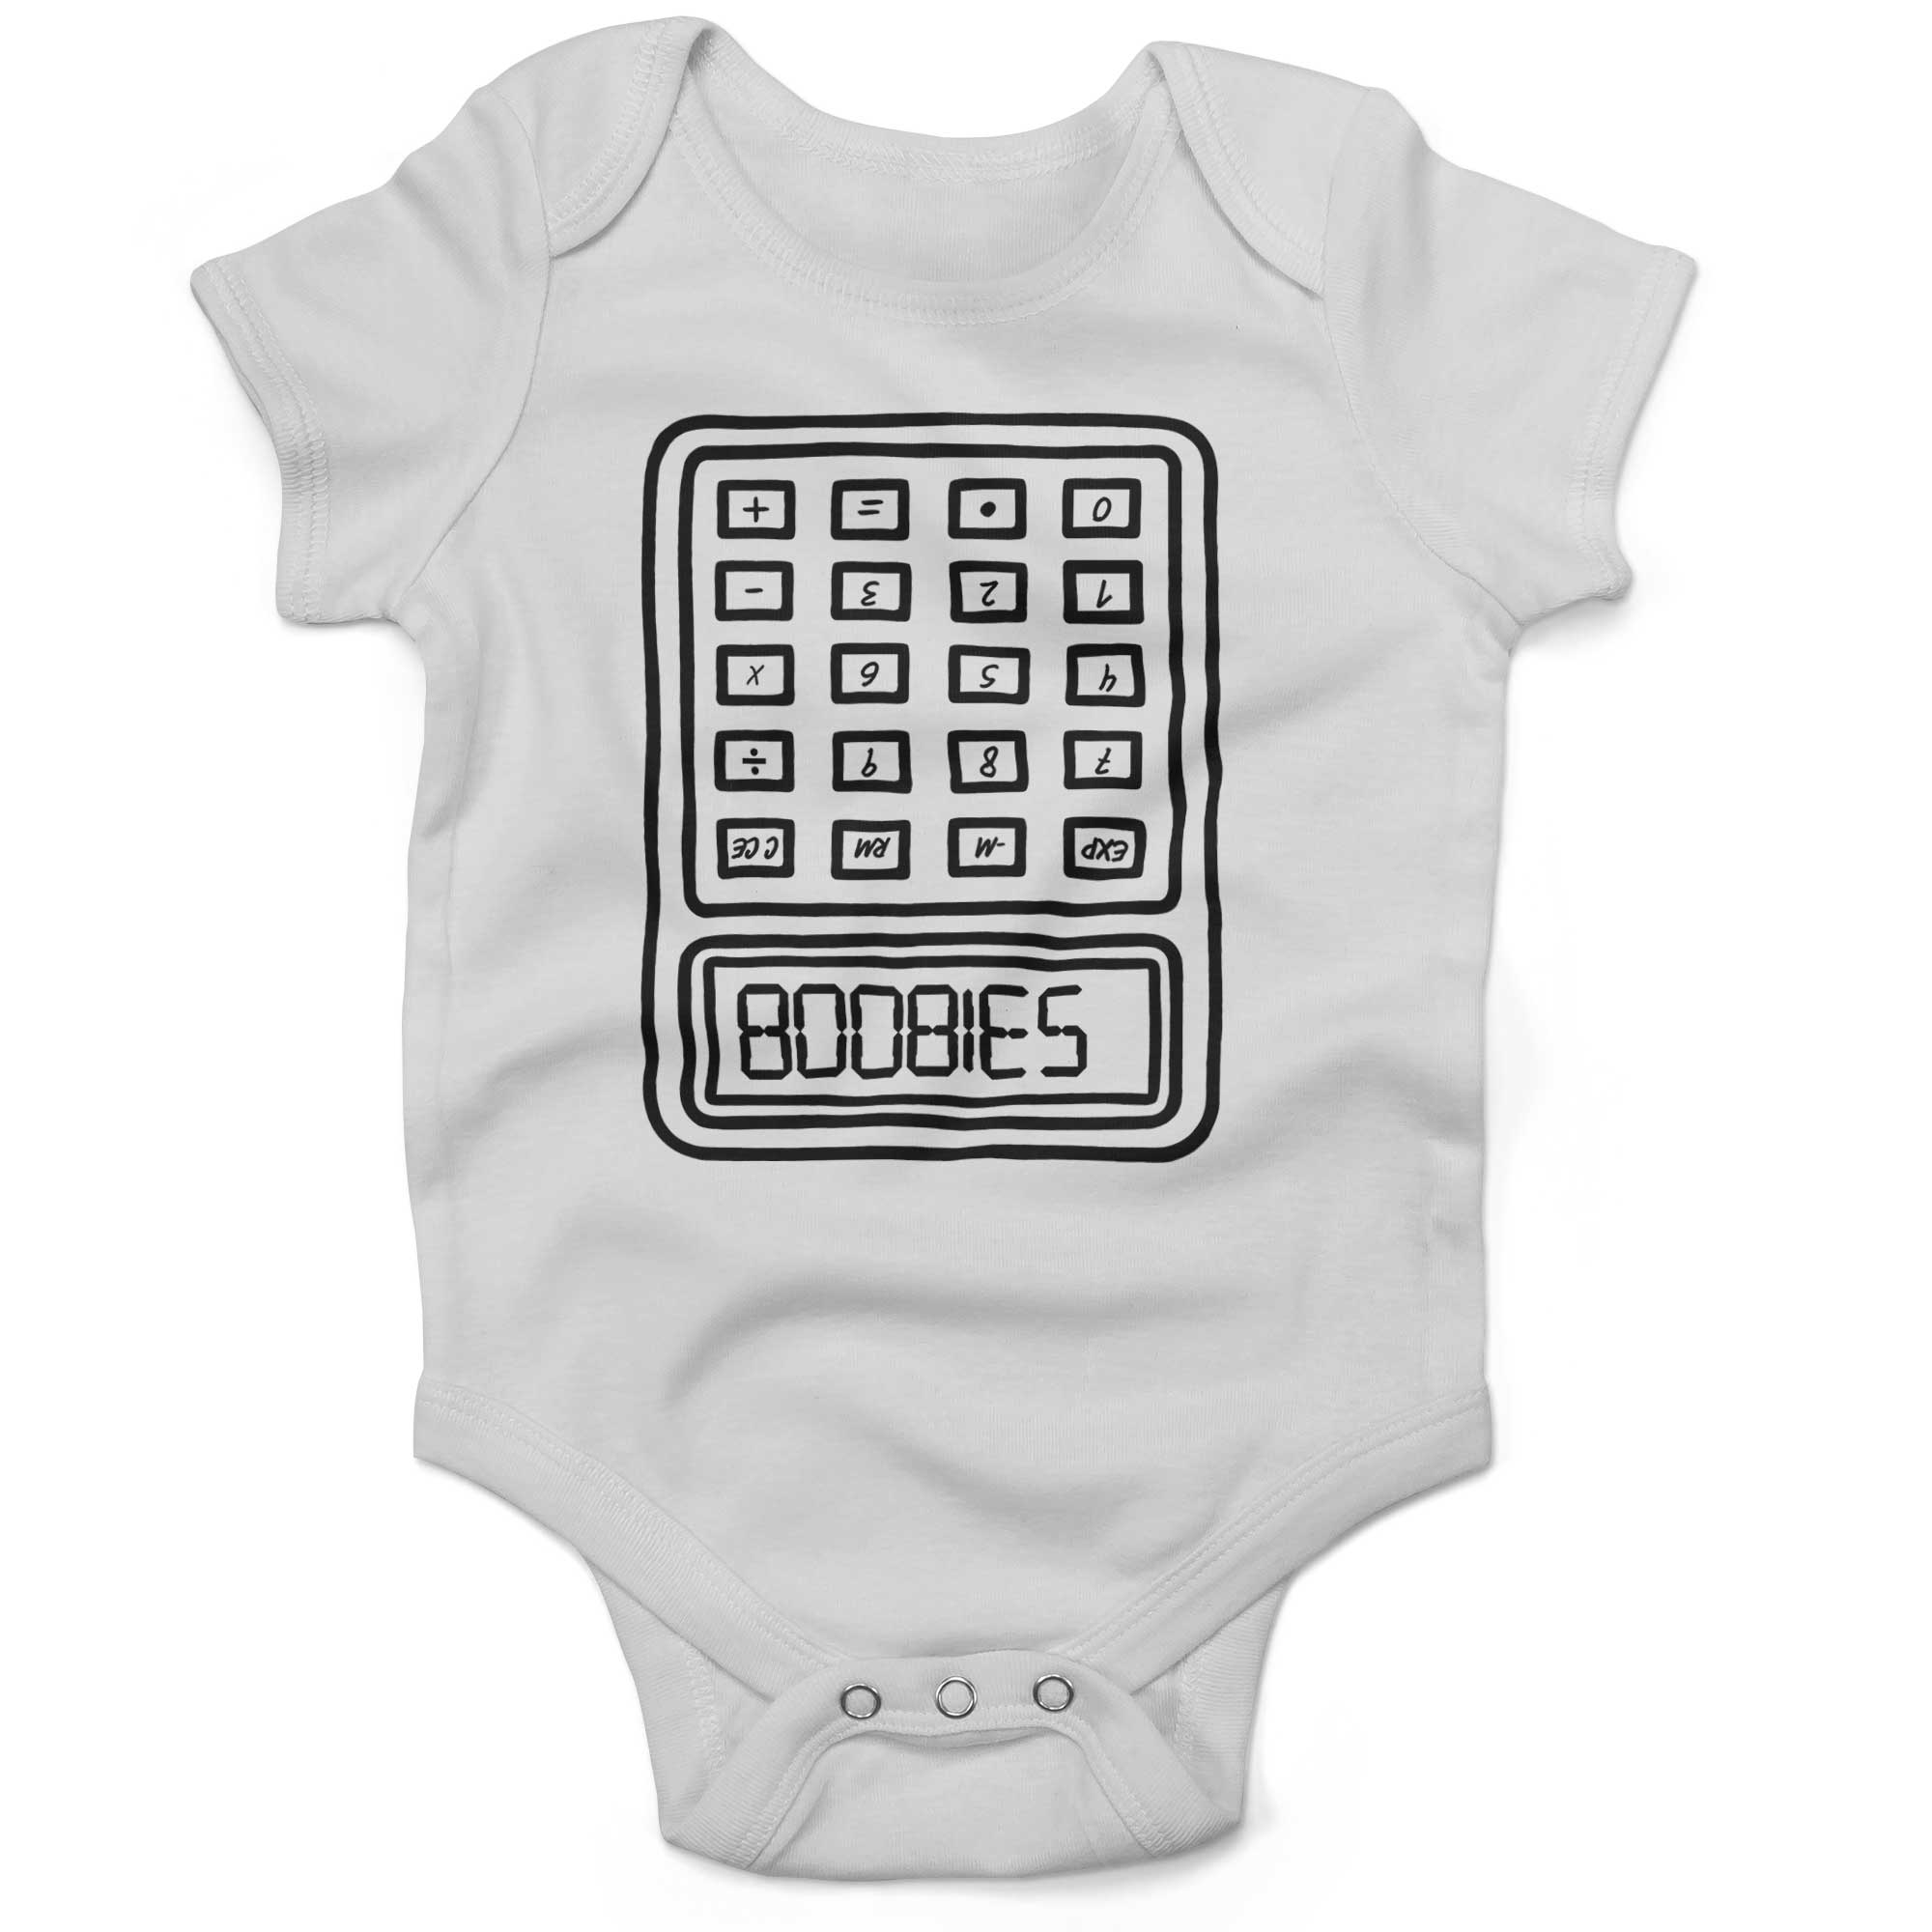 baby genetics calculator